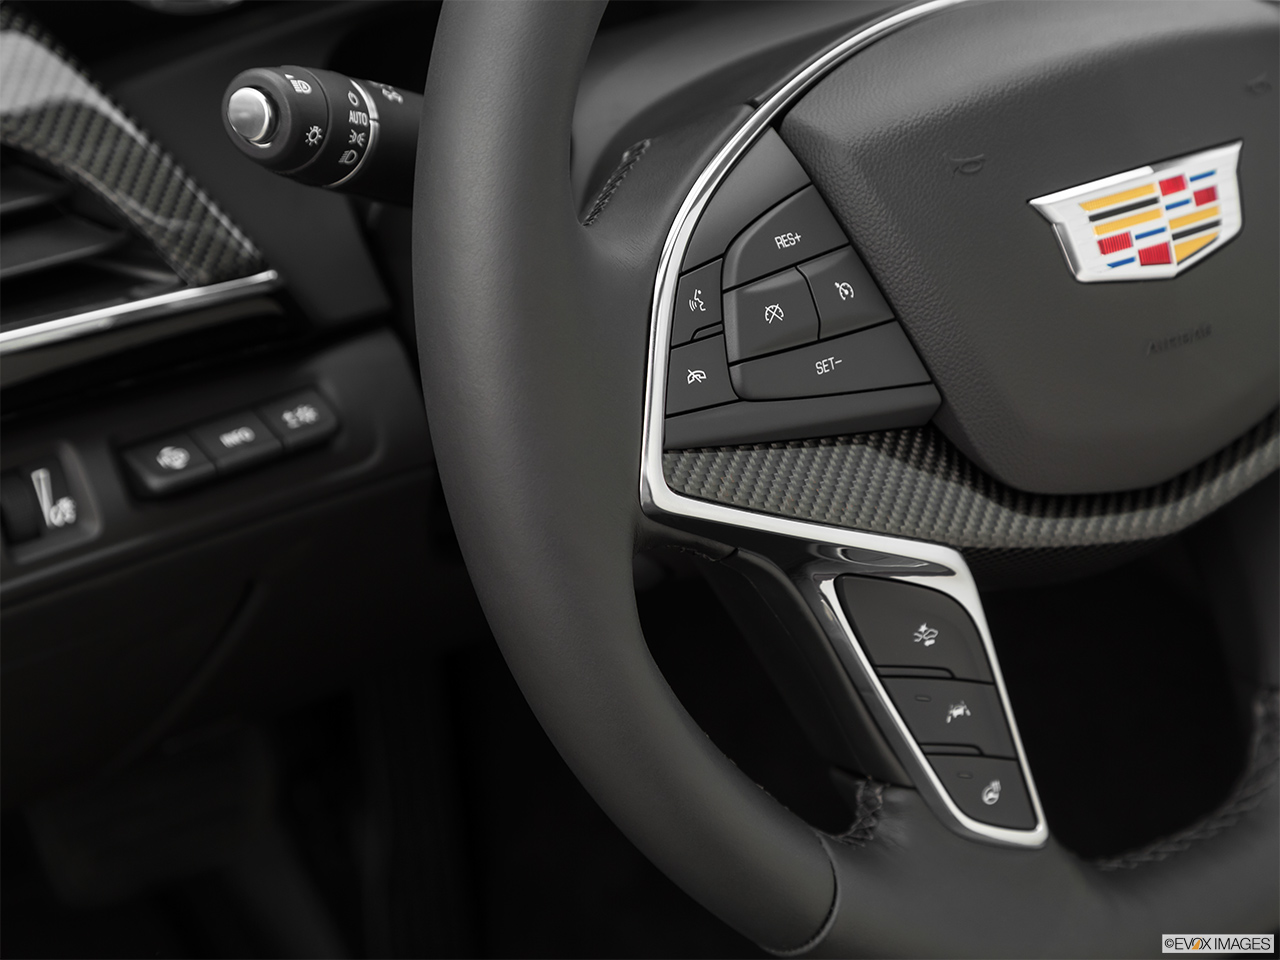 2019 Cadillac CT6-V Base Steering Wheel Controls (Left Side) 